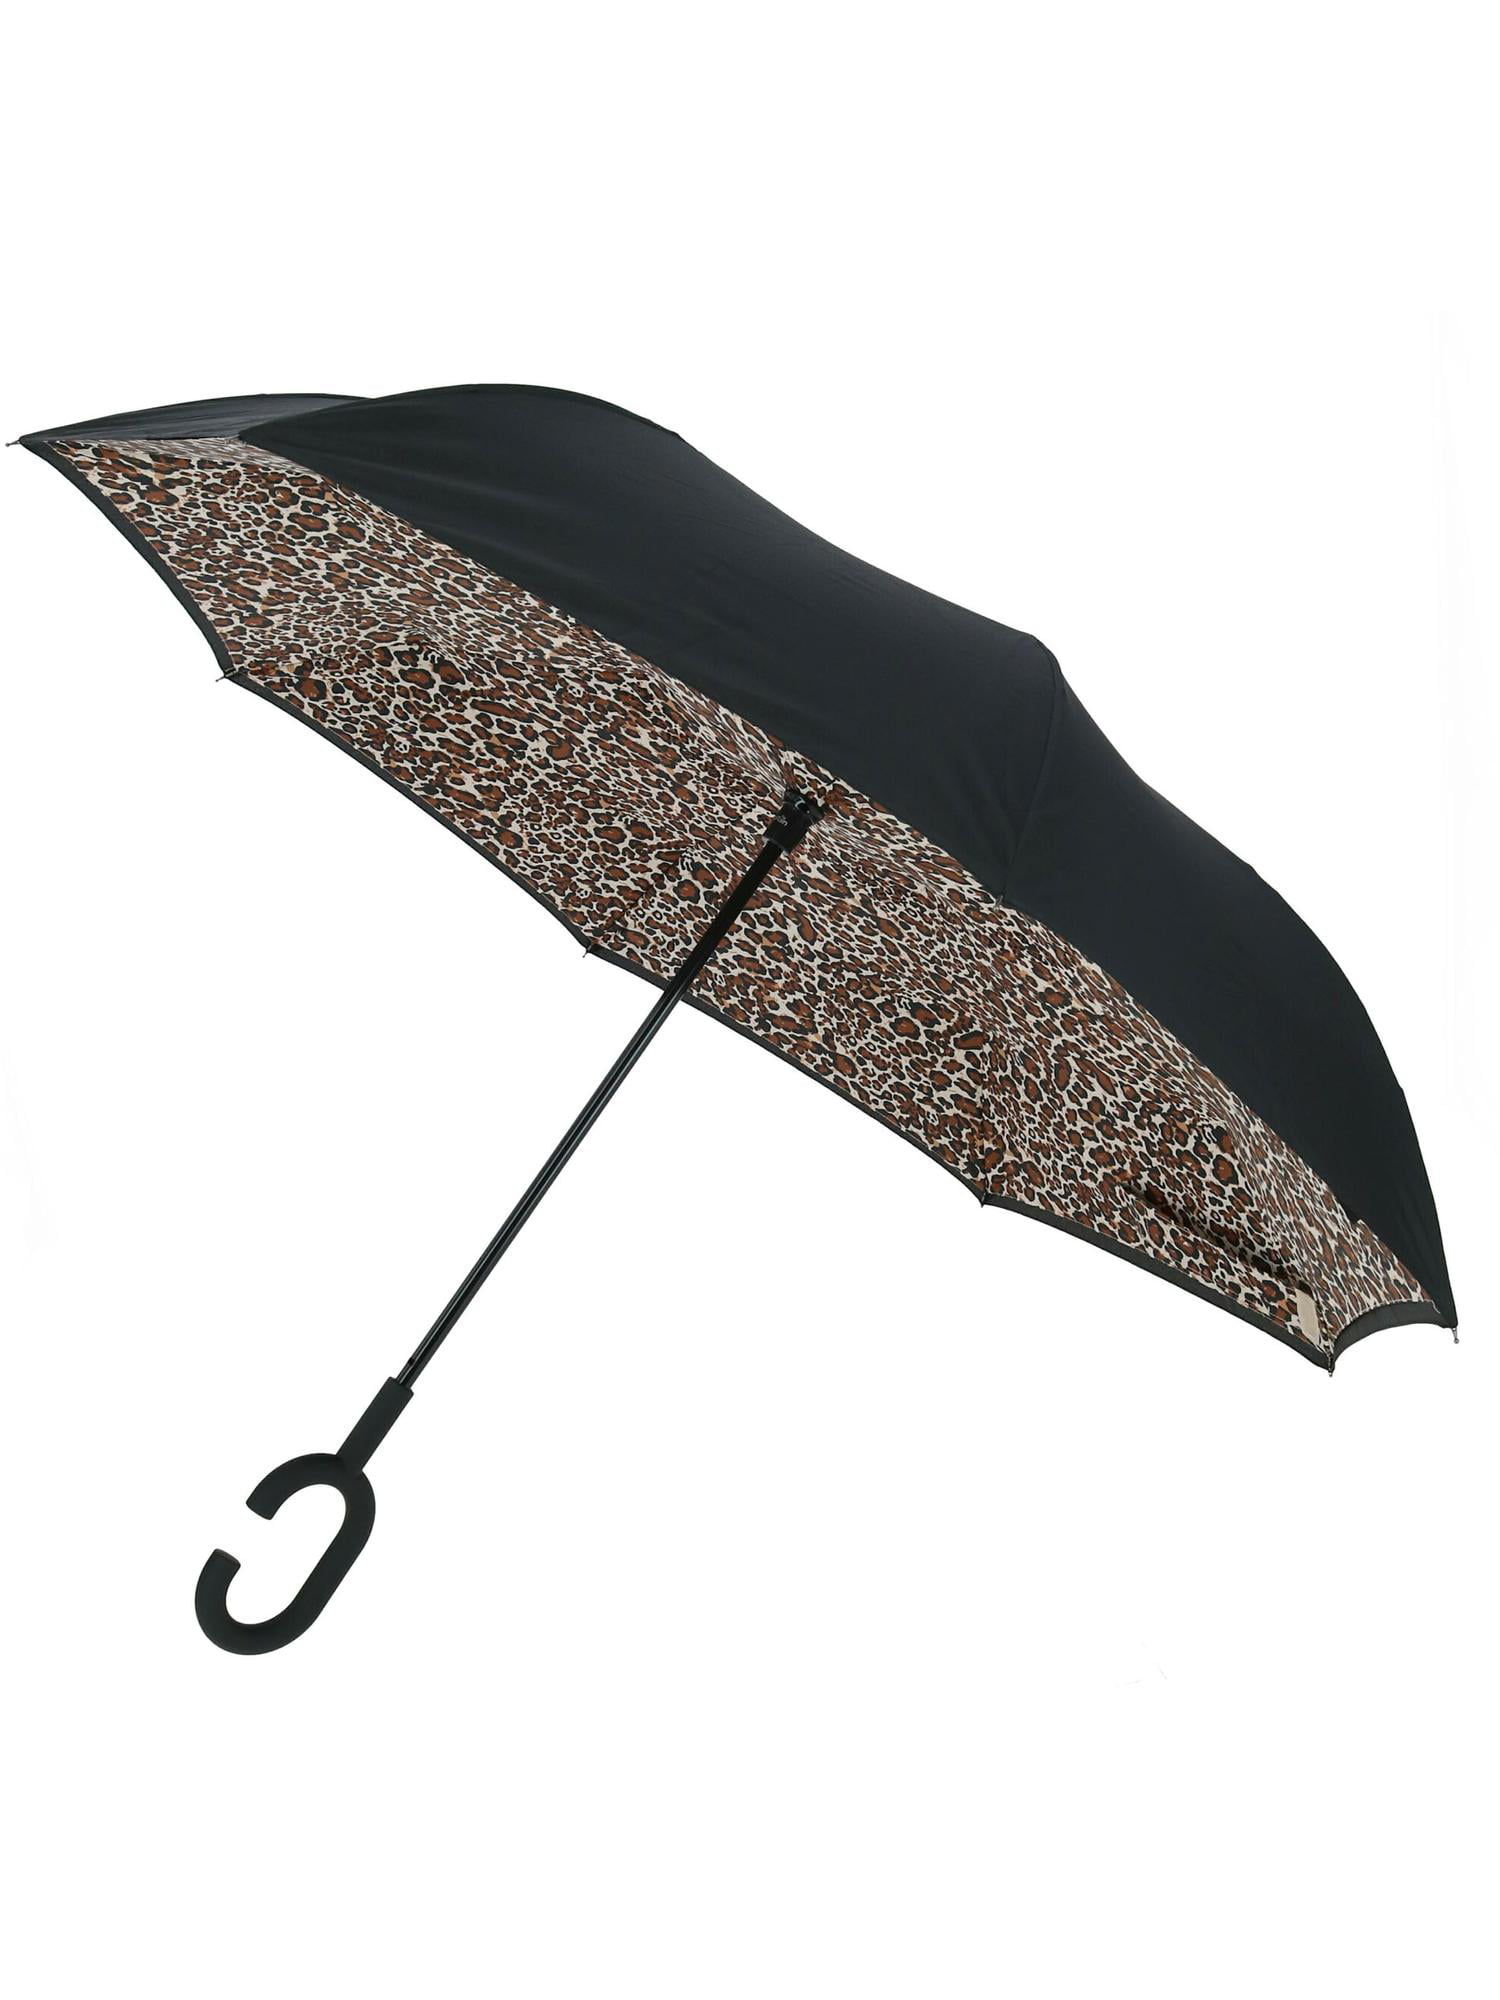 Monet ShedRain UnbelievaBrella Fashion Floral Print Reverse Umbrella 